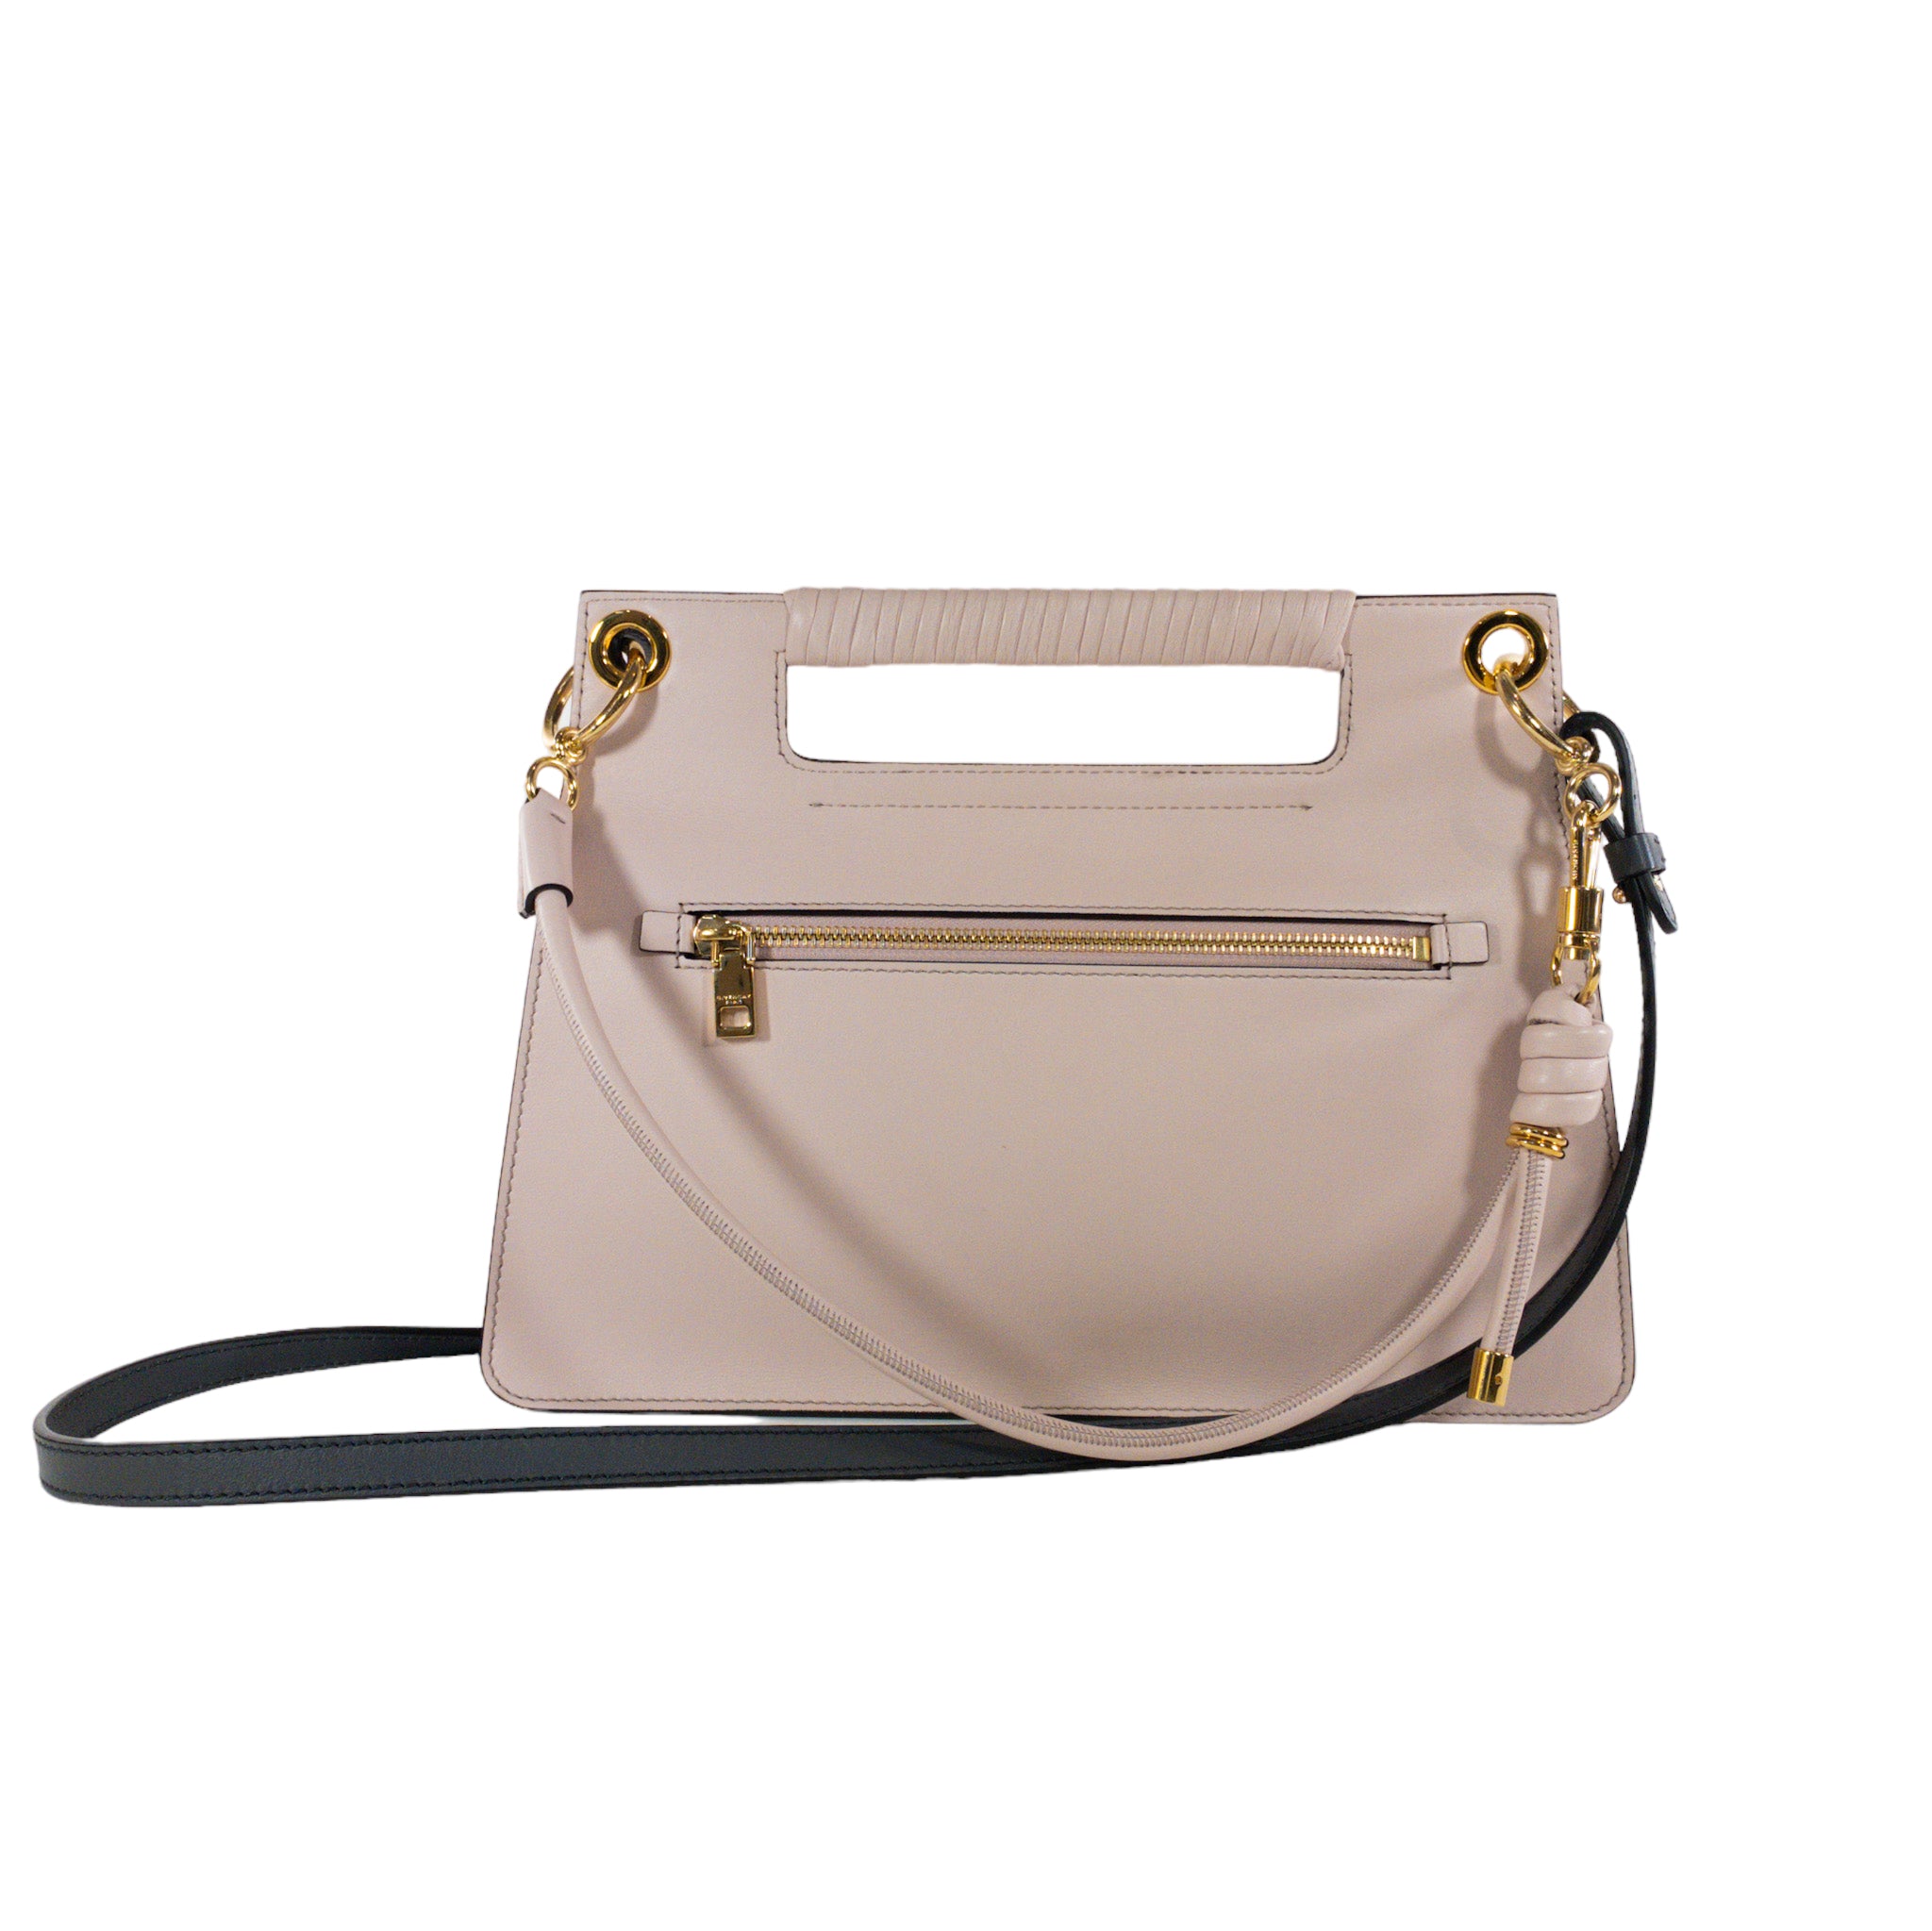 Givenchy Blush Whip Bag